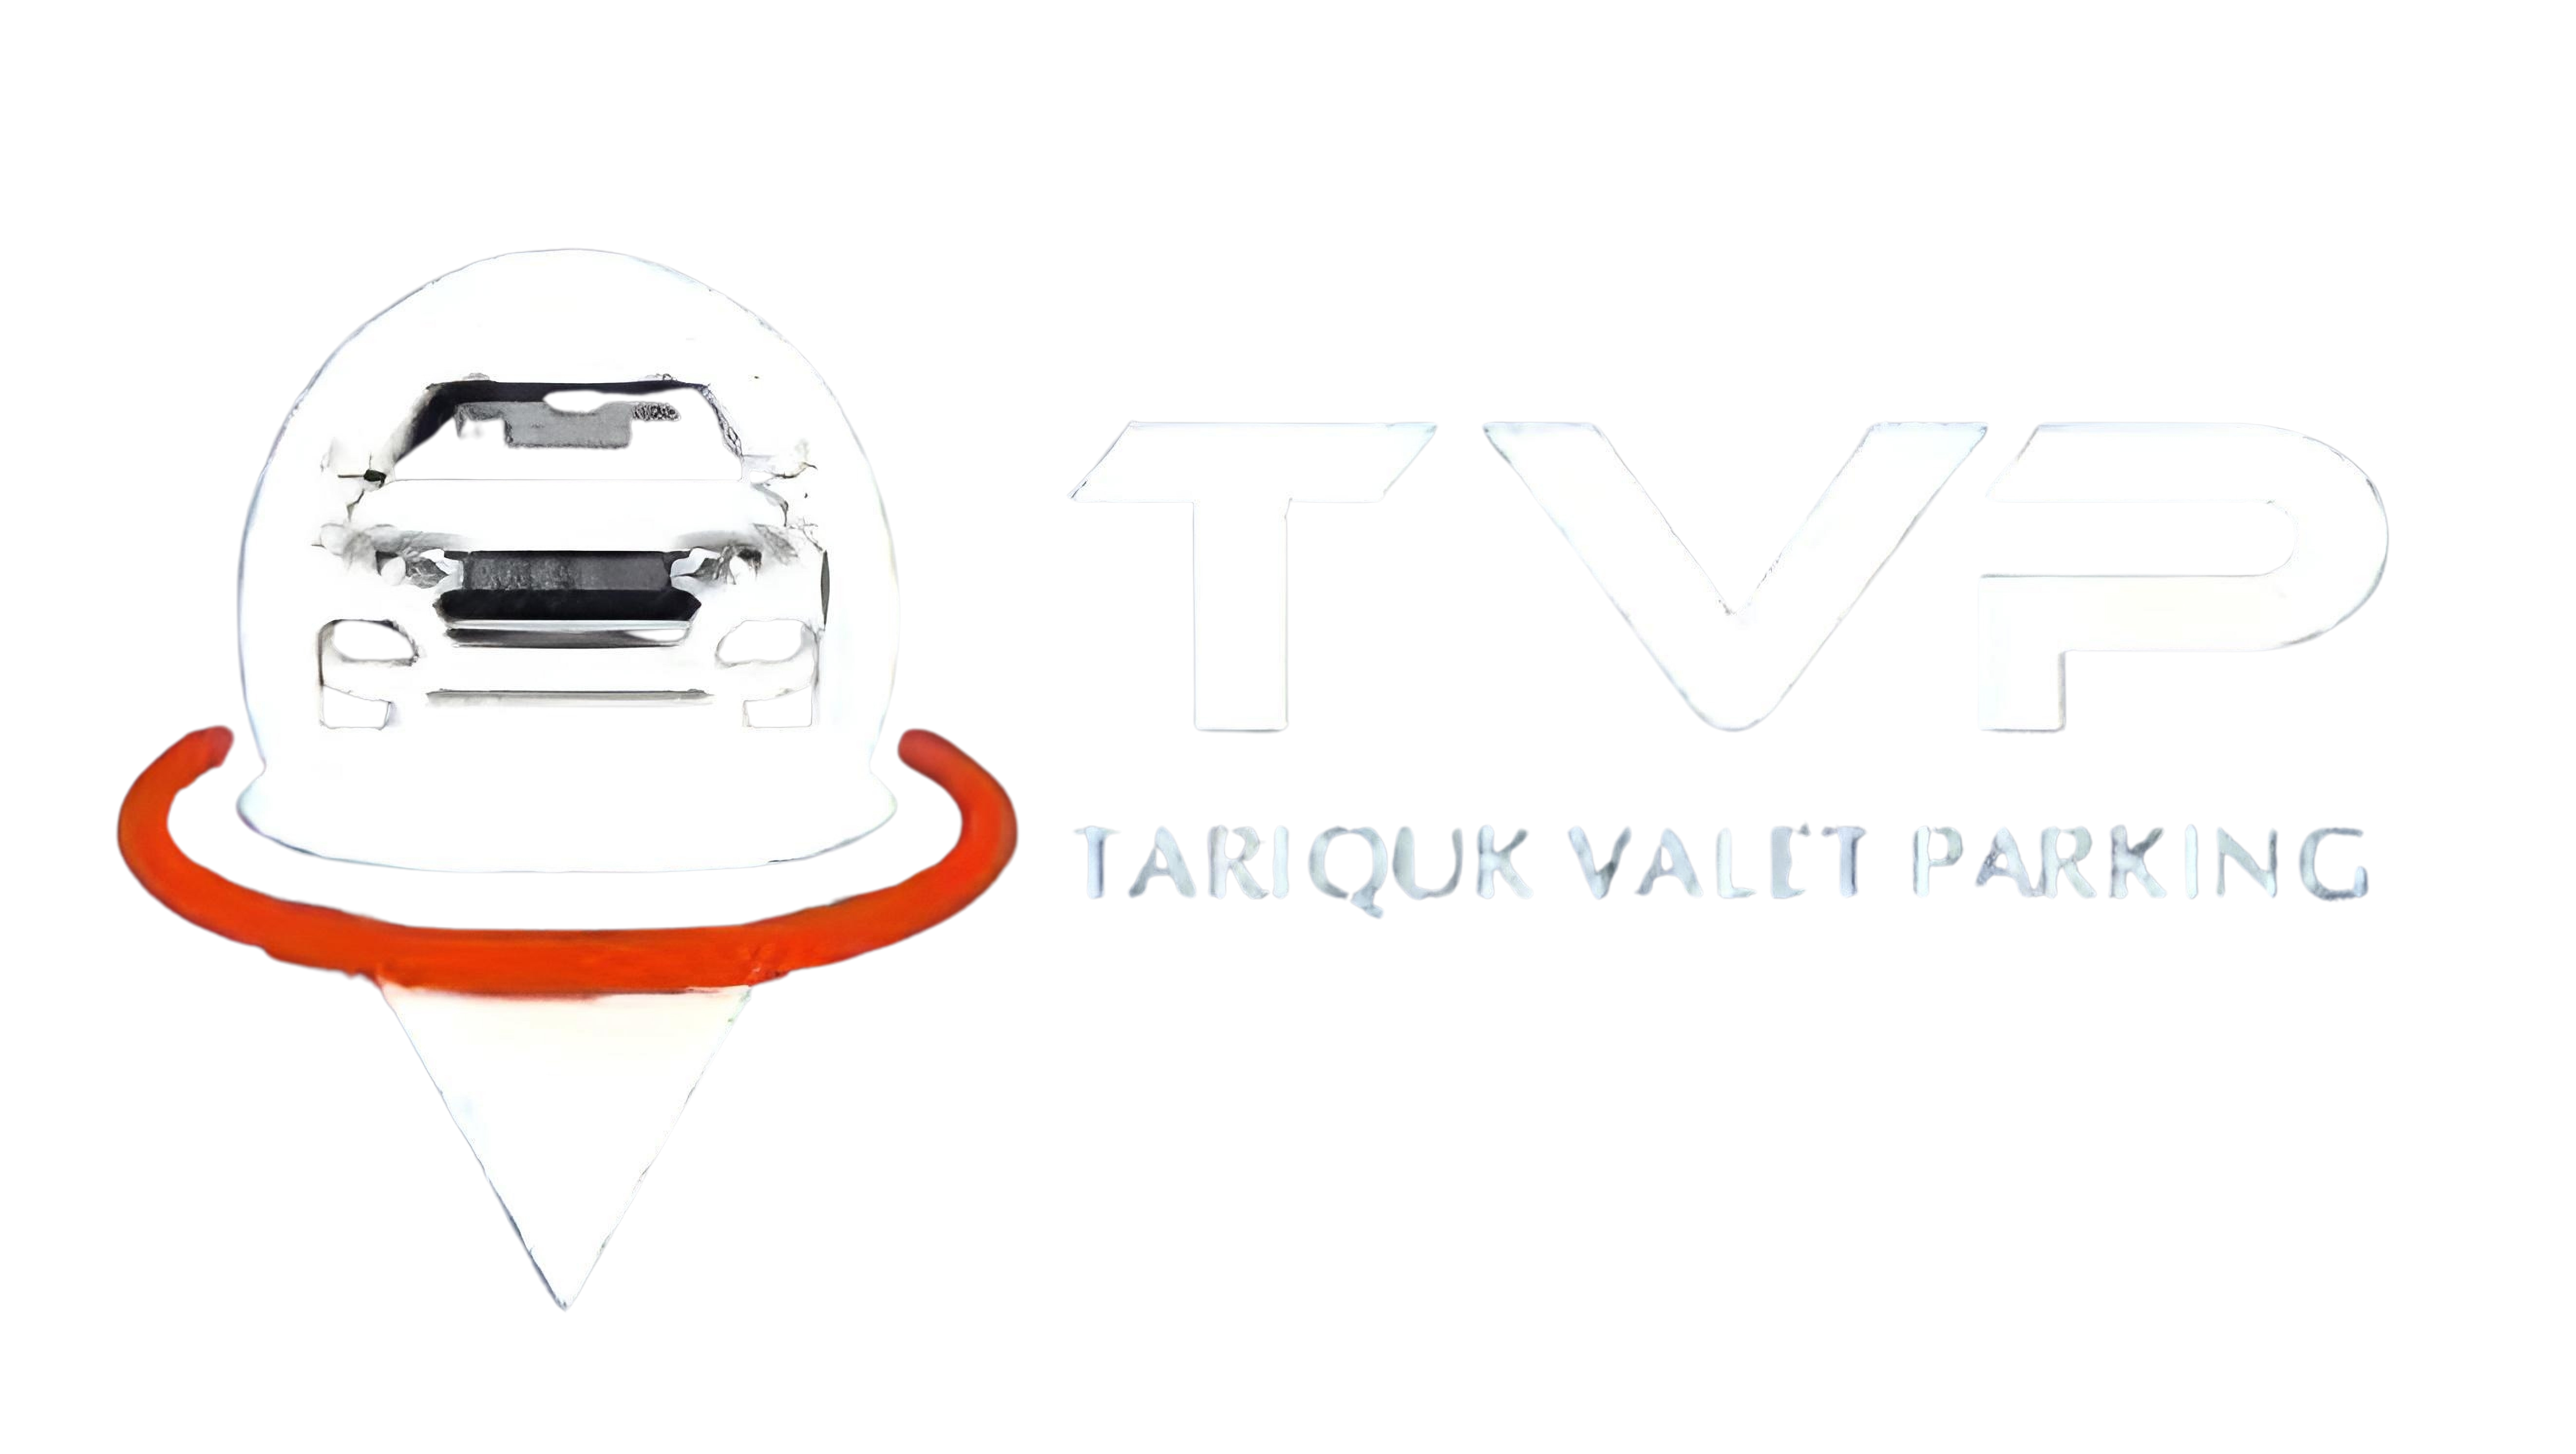 Tariquk Valet Parking Services Dubai